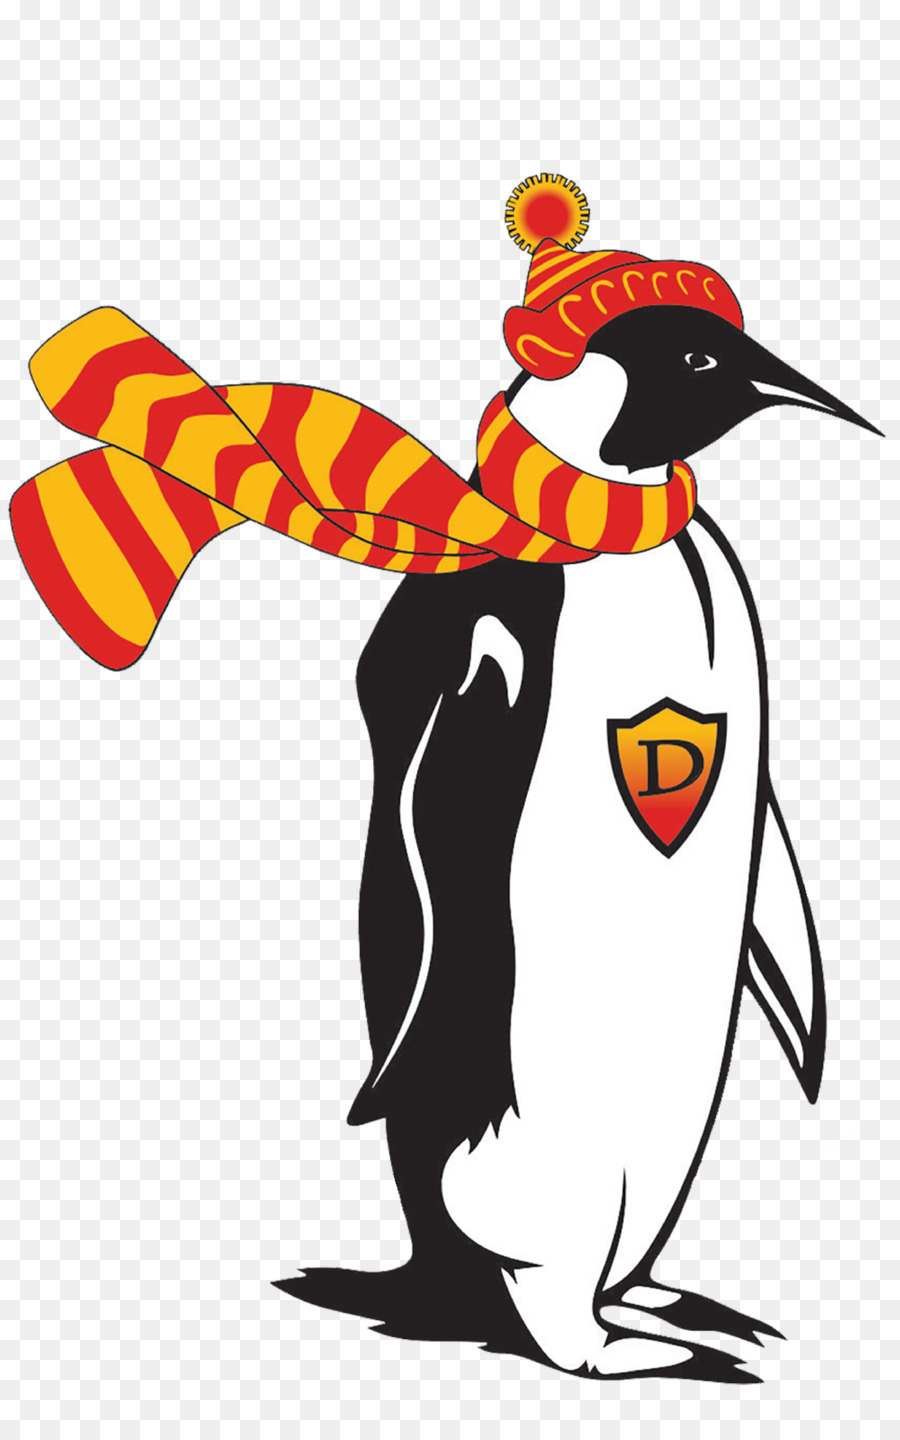 Pinguino Wall decal Sticker - l'aria fredda